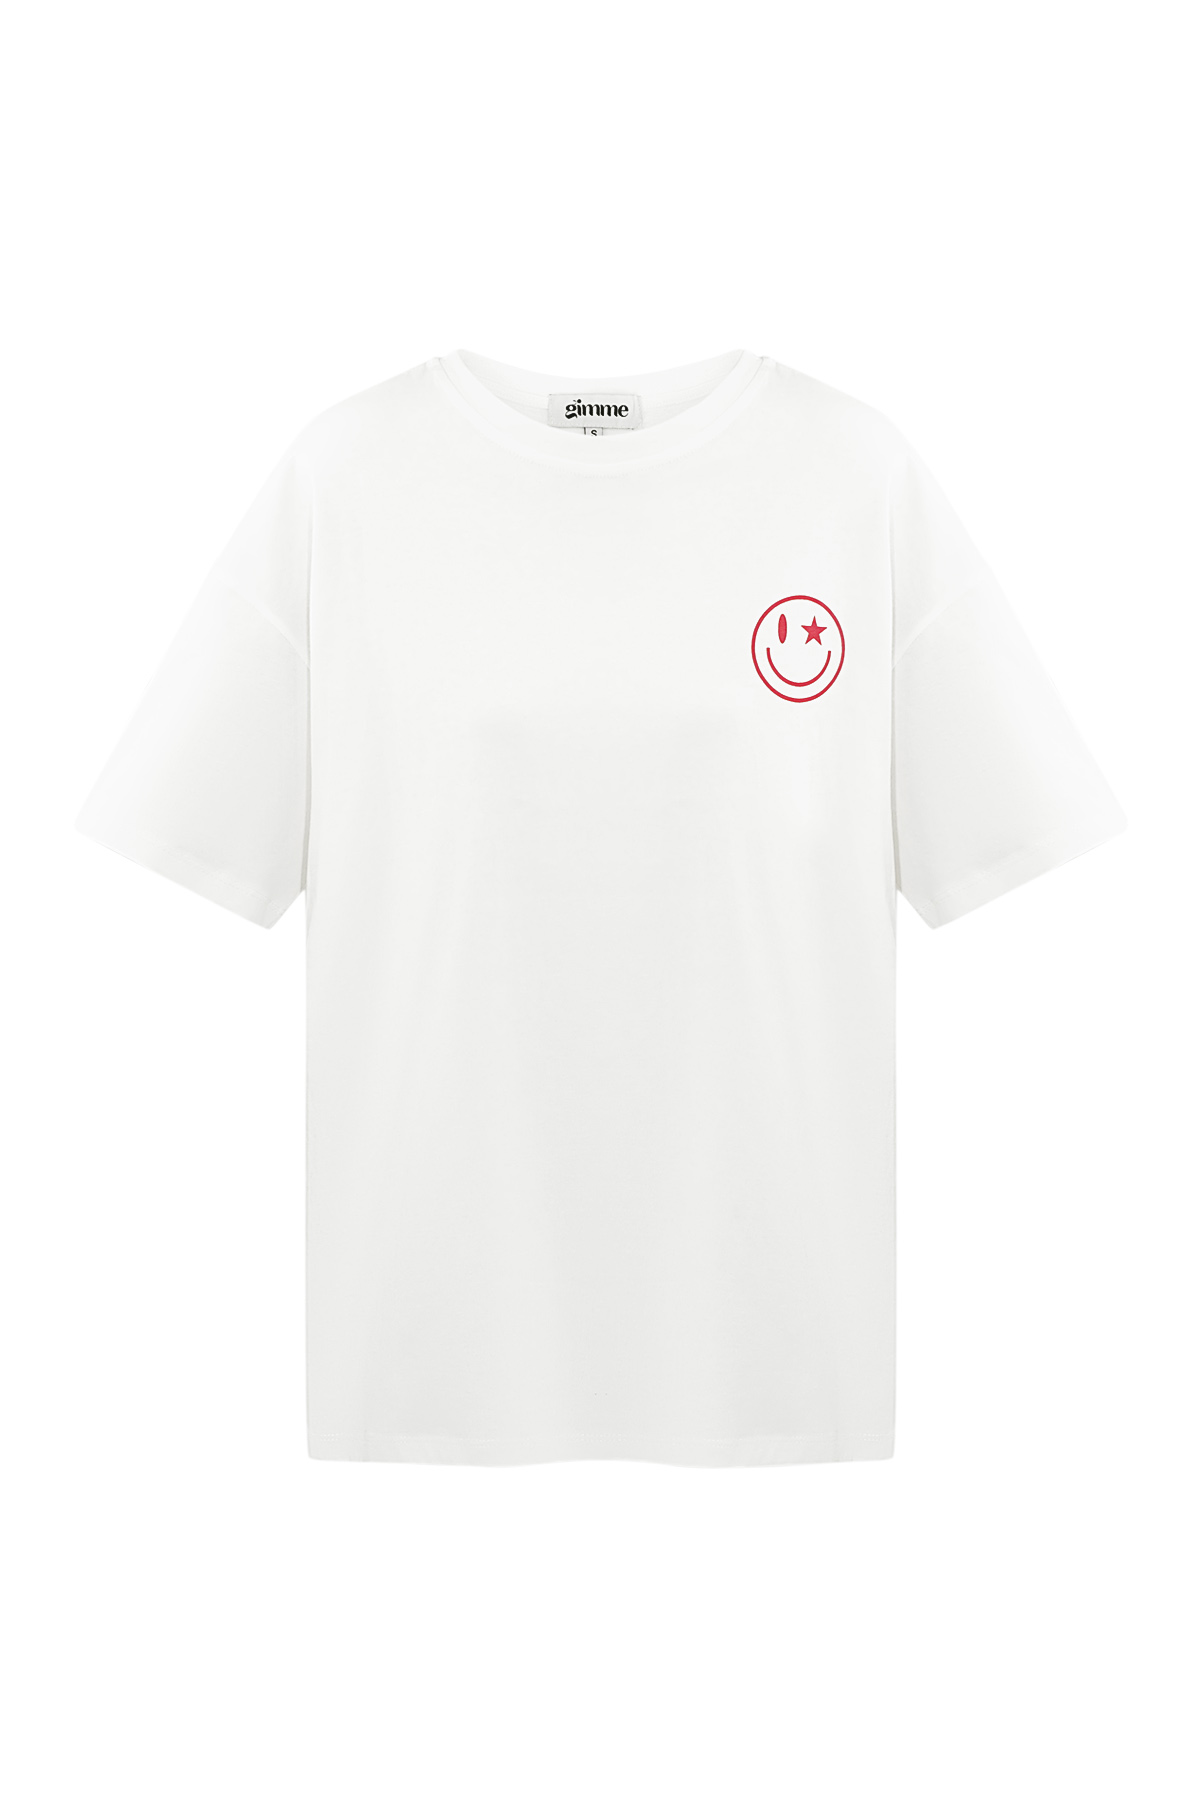 T-shirt happy life smiley - white h5 